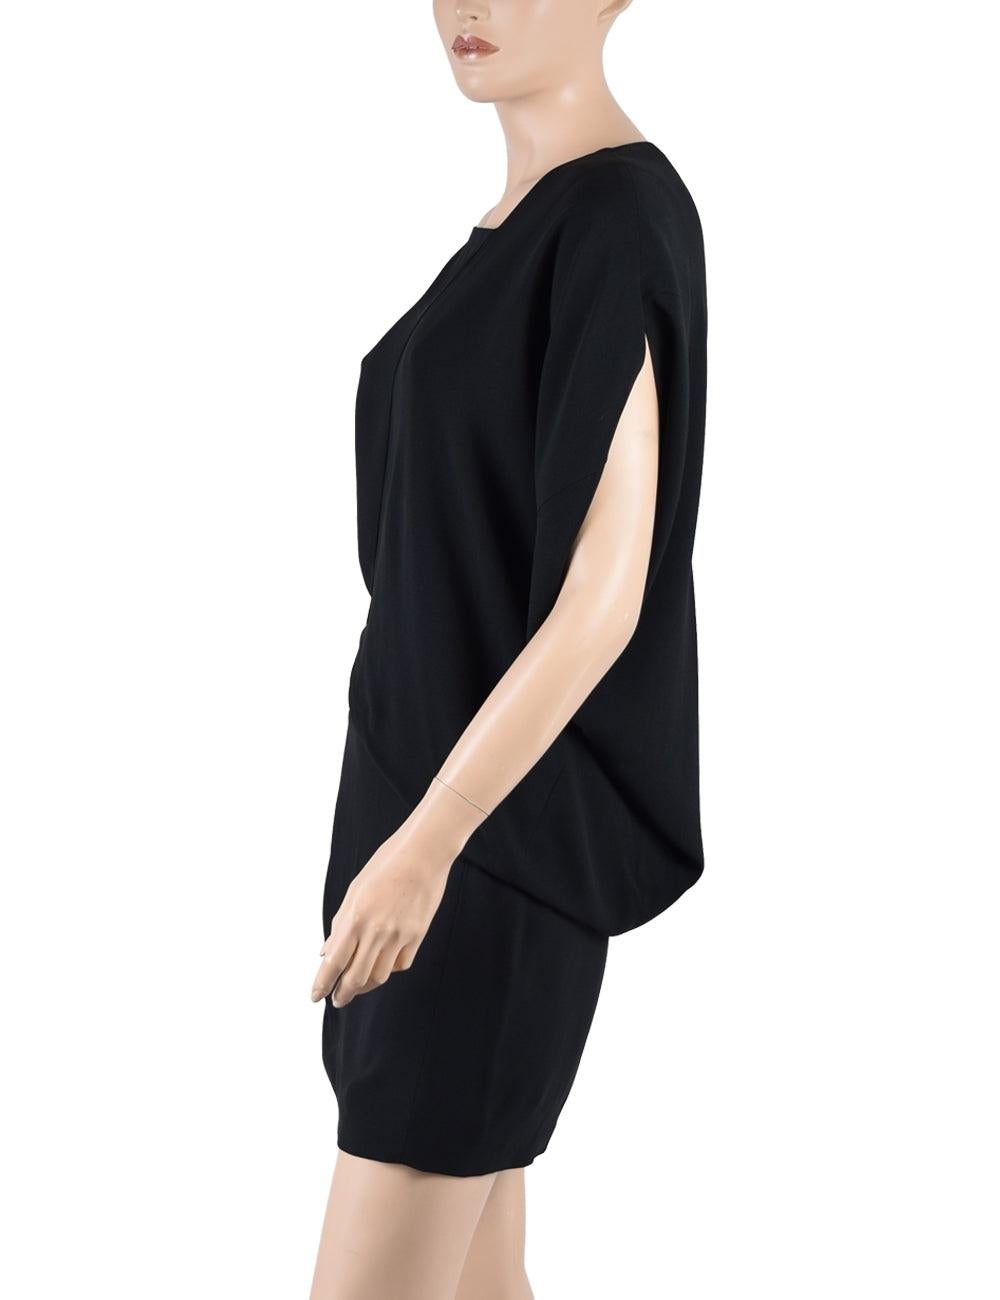 Women's Barbara Bui US 4 Black Asymmetric Collar Dress with Tube Bottom For Sale